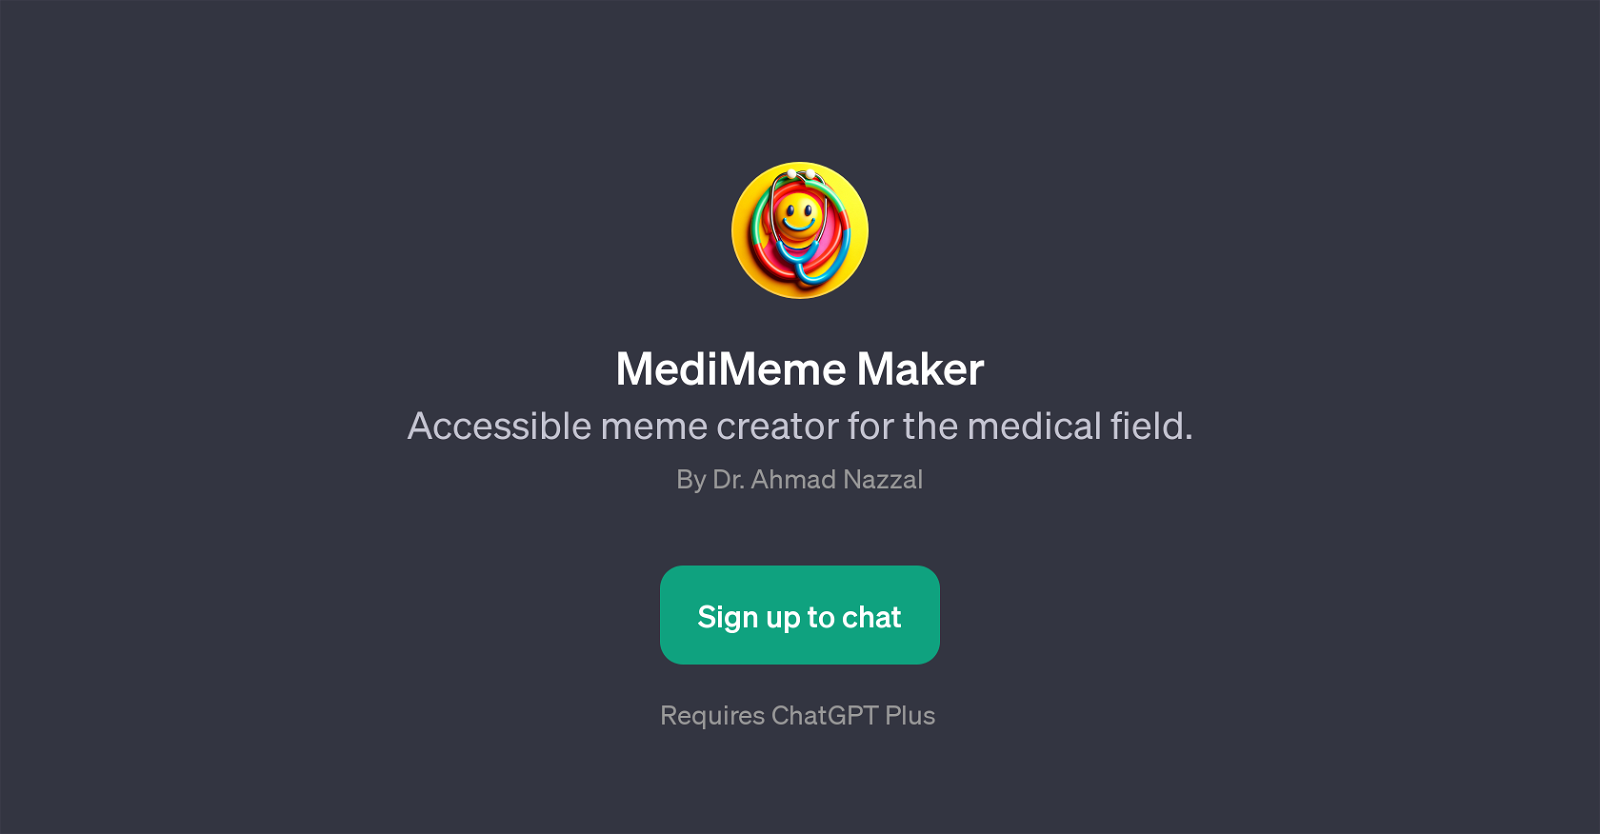 MediMeme Maker website